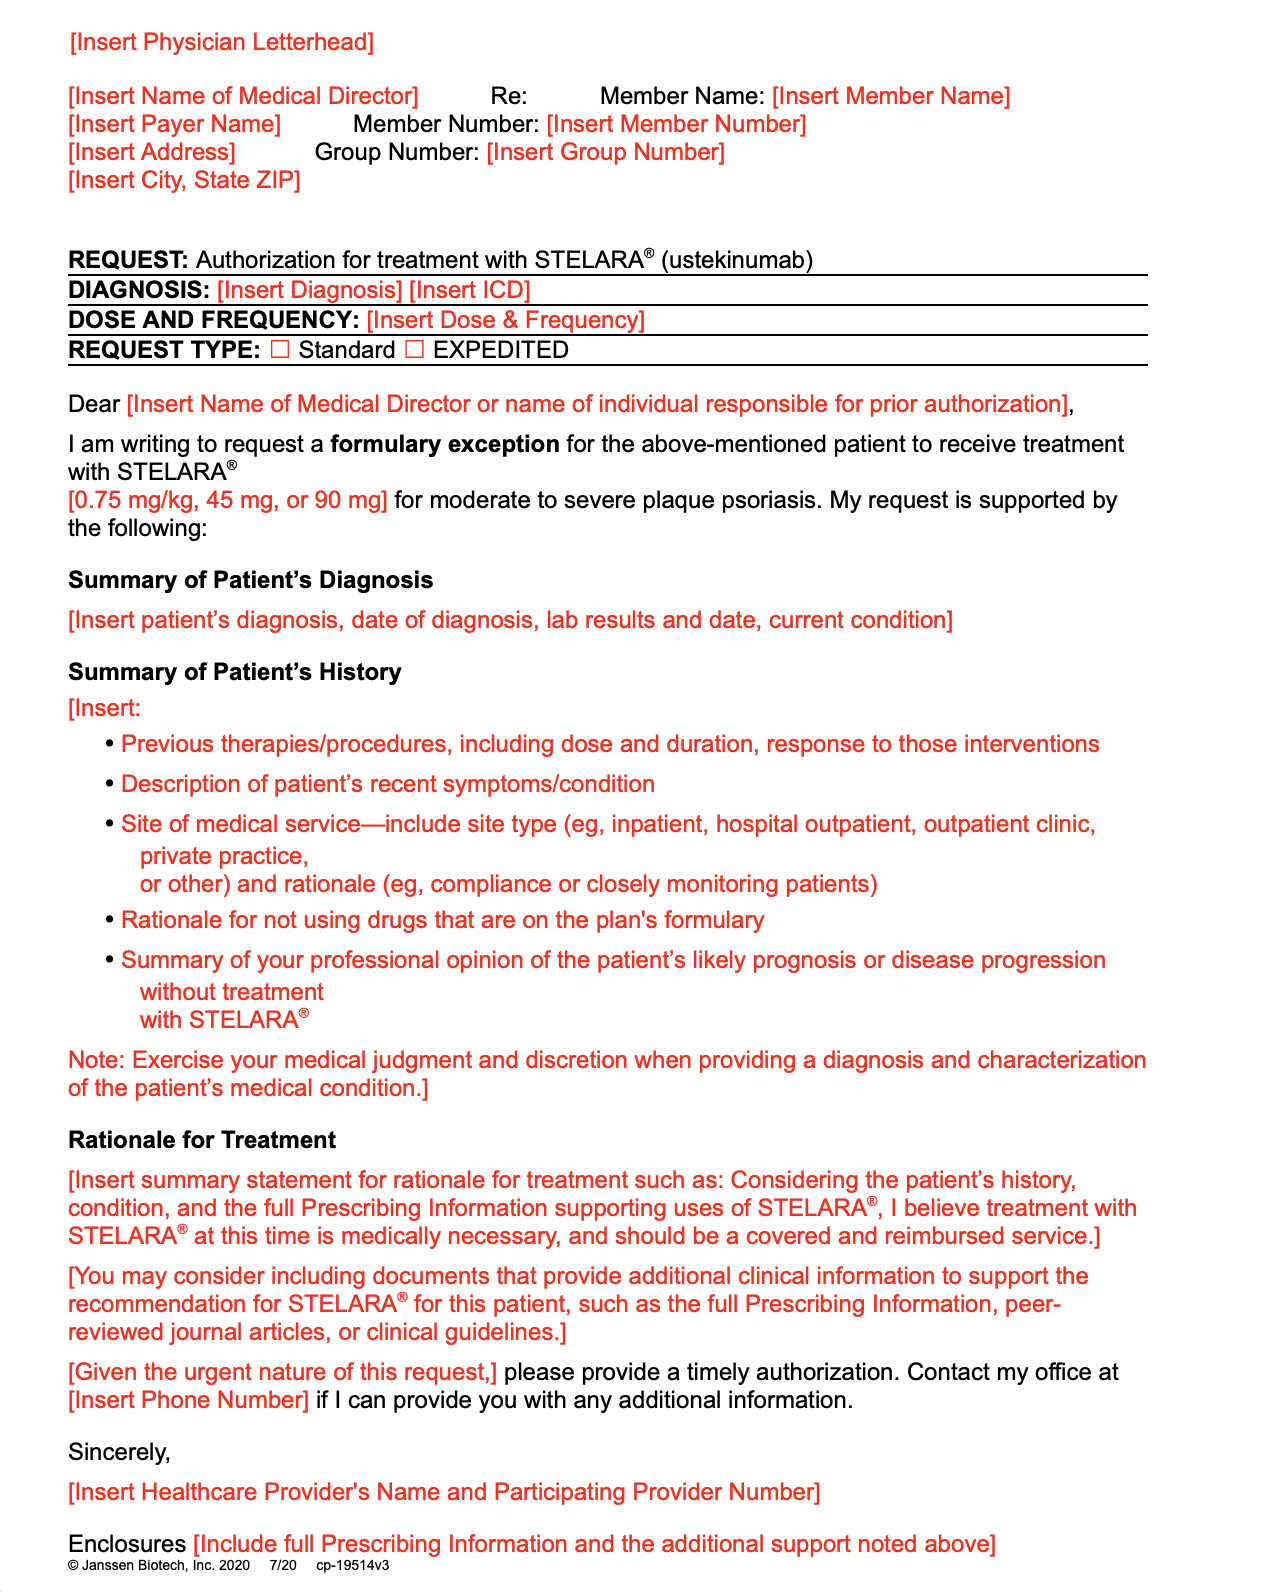 STELARA® Letter of Exception (Plaque Psoriasis)